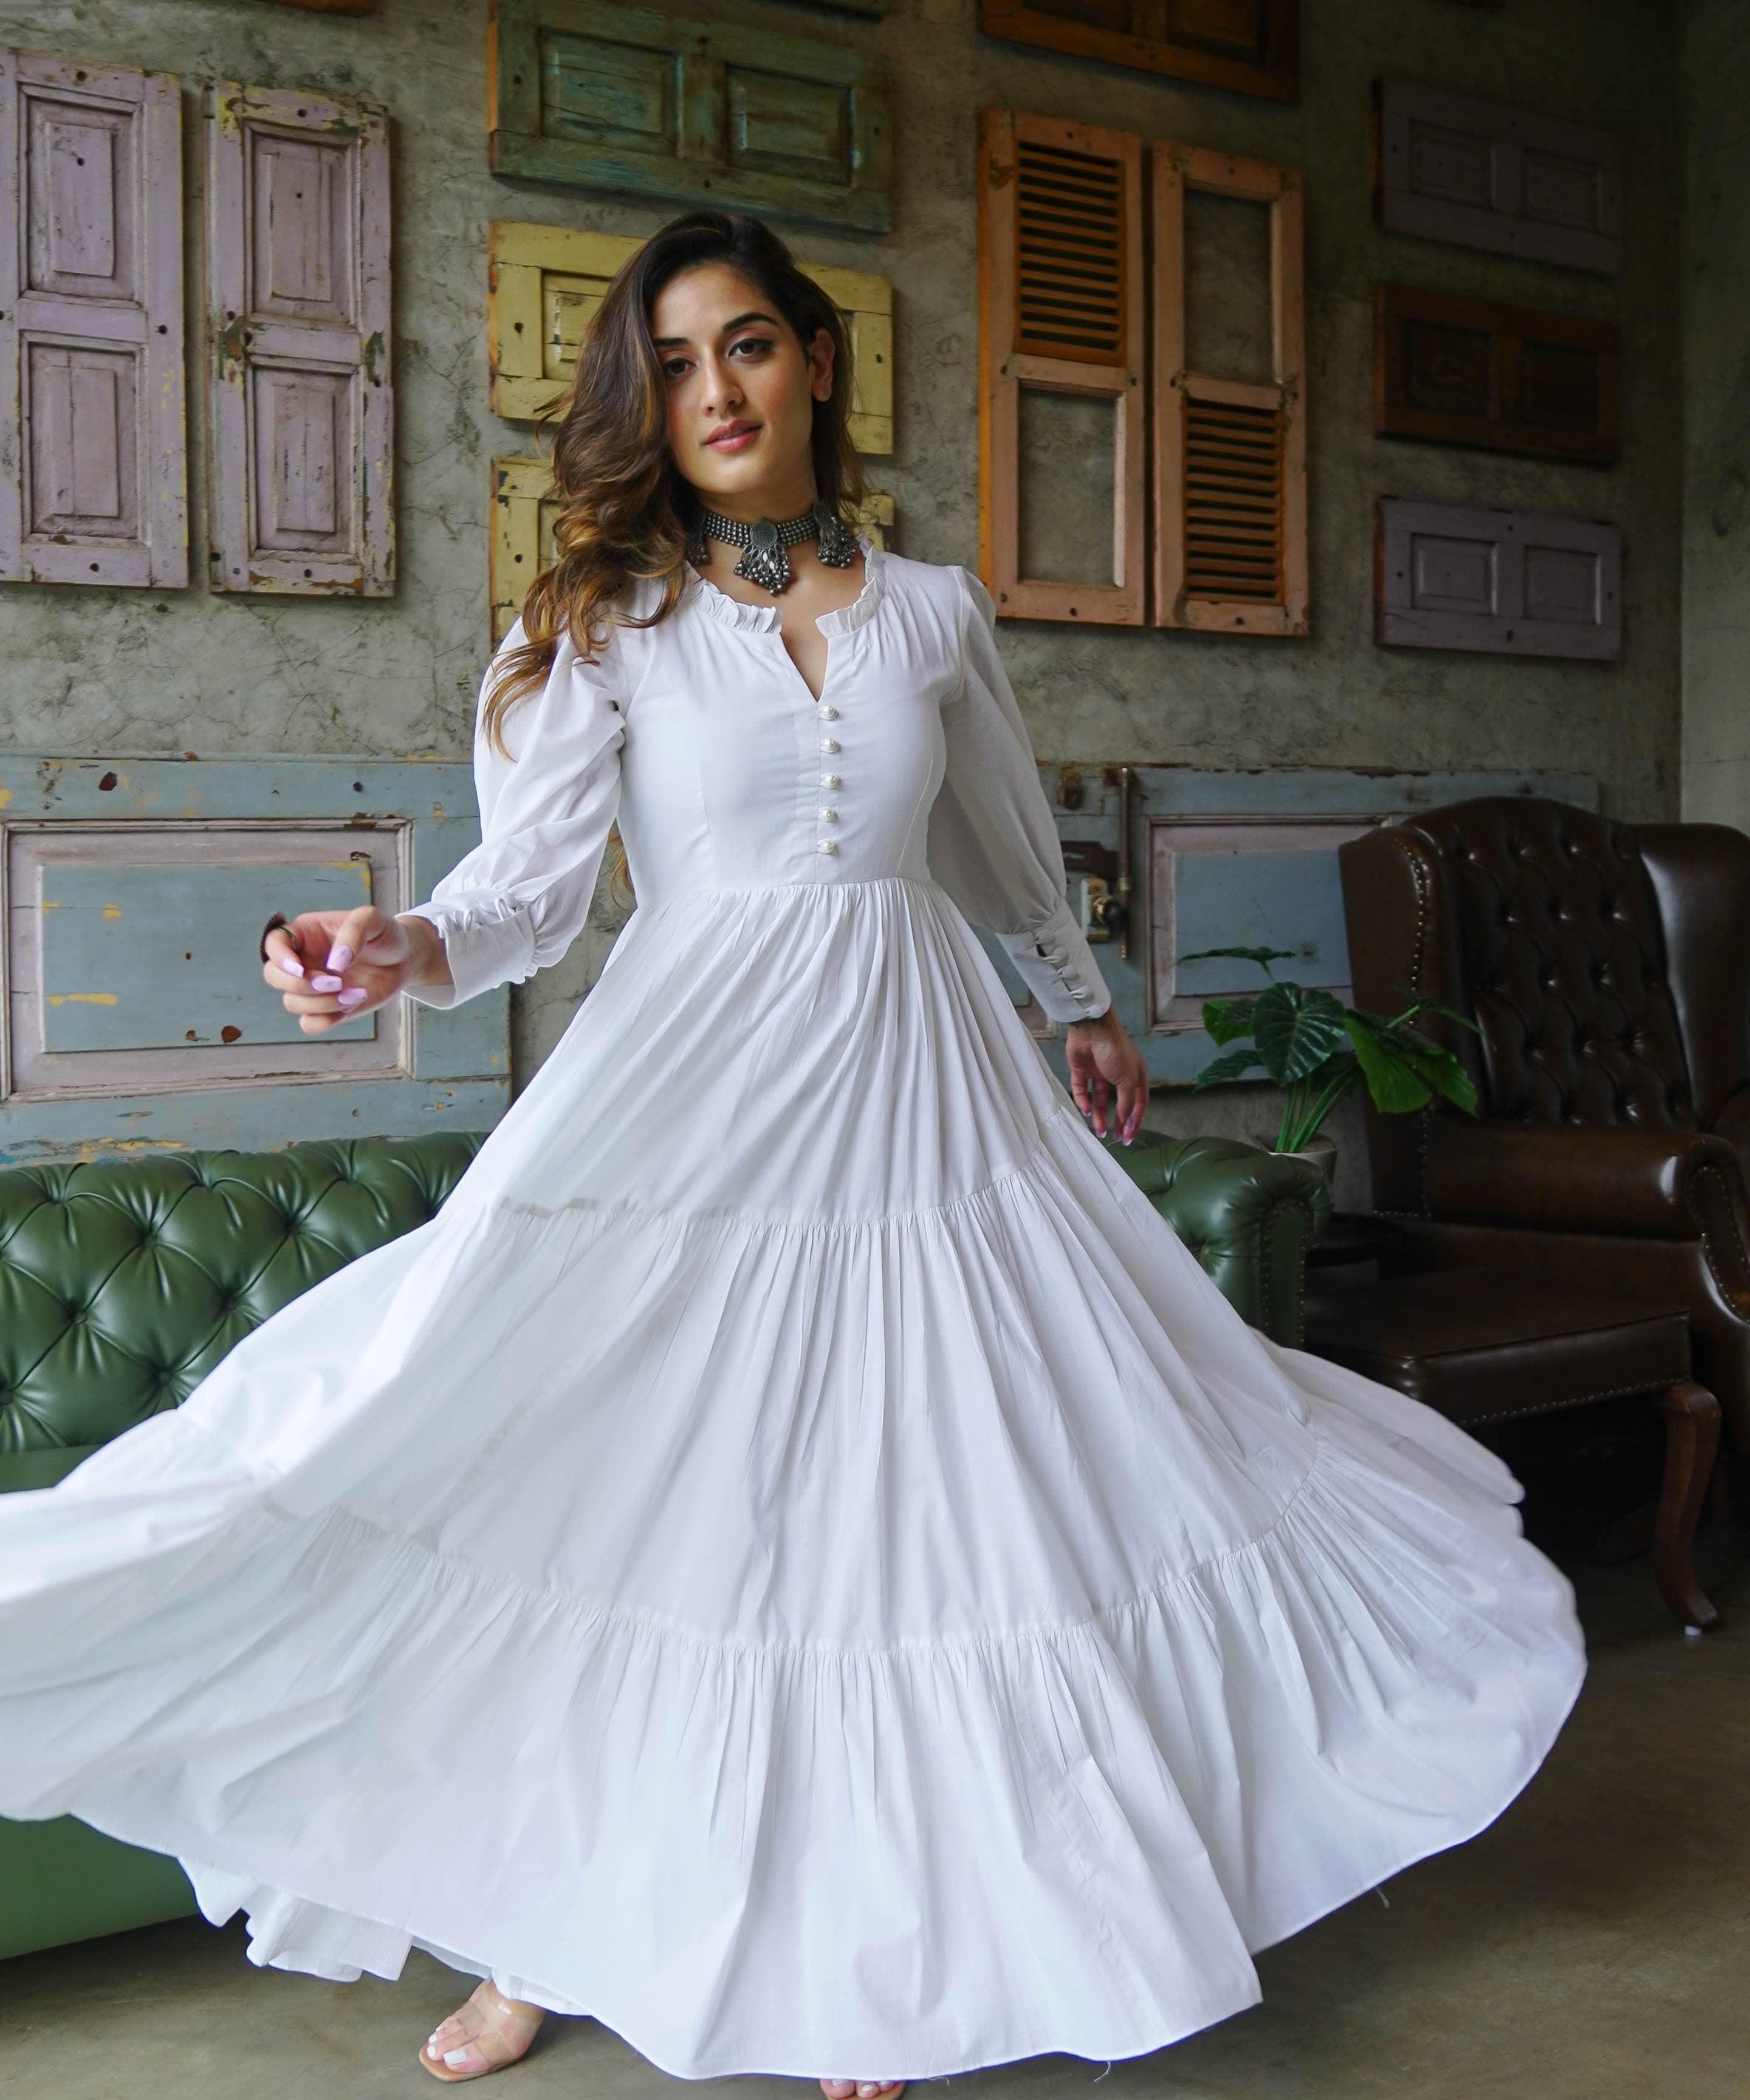 FAYE BLUE COTTON DRESS - Buy Designer Ethnic Wear for Women Online